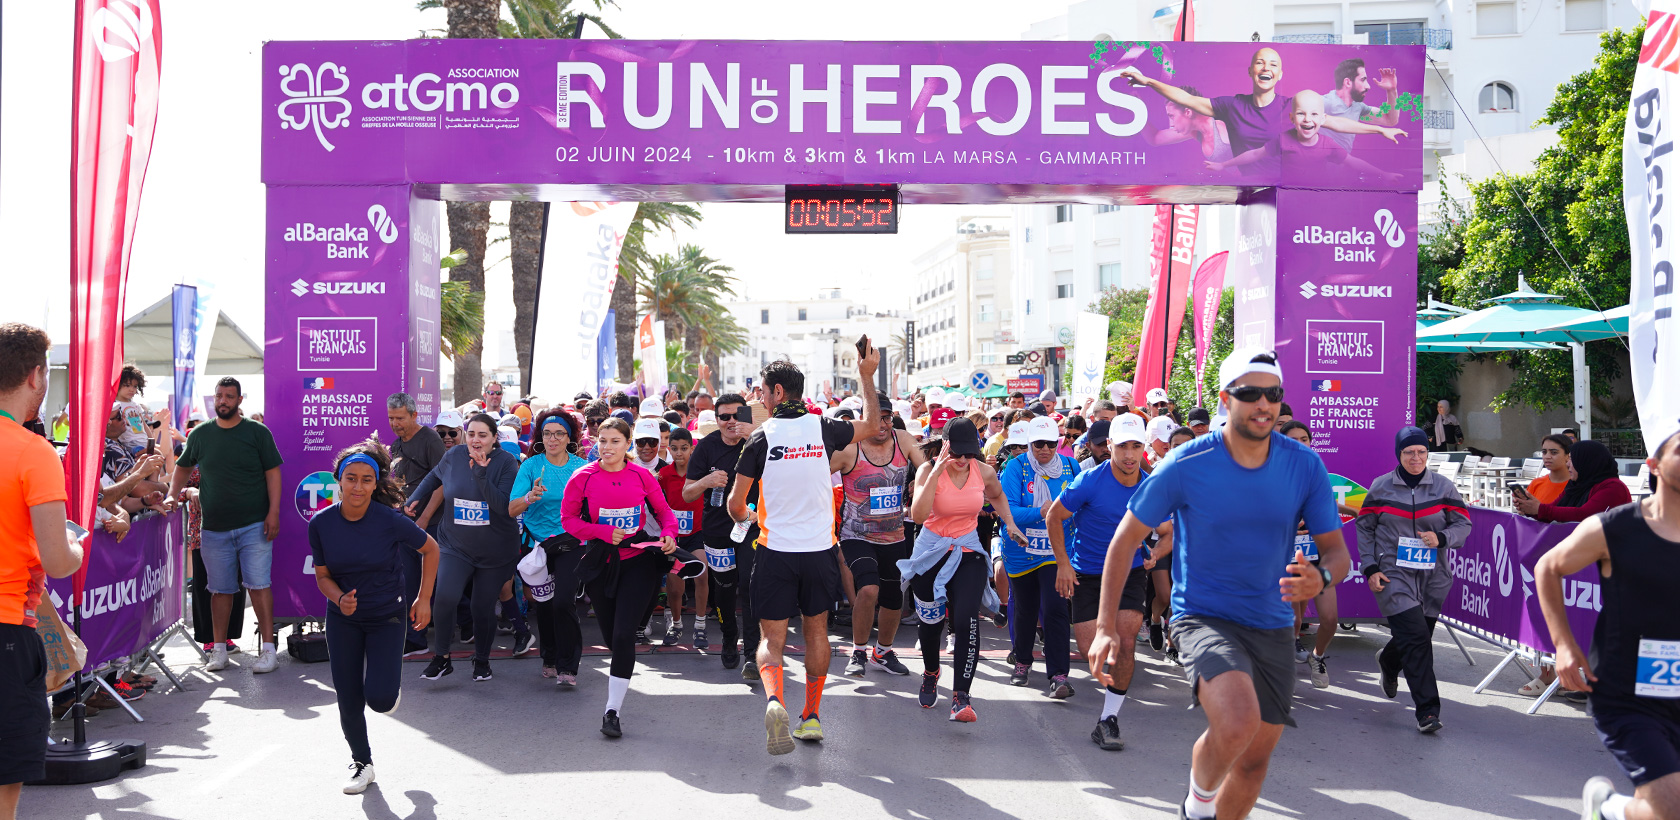 CARPRO Suzuki partenaire de la Run of Heroes pour une Cause Solidaire